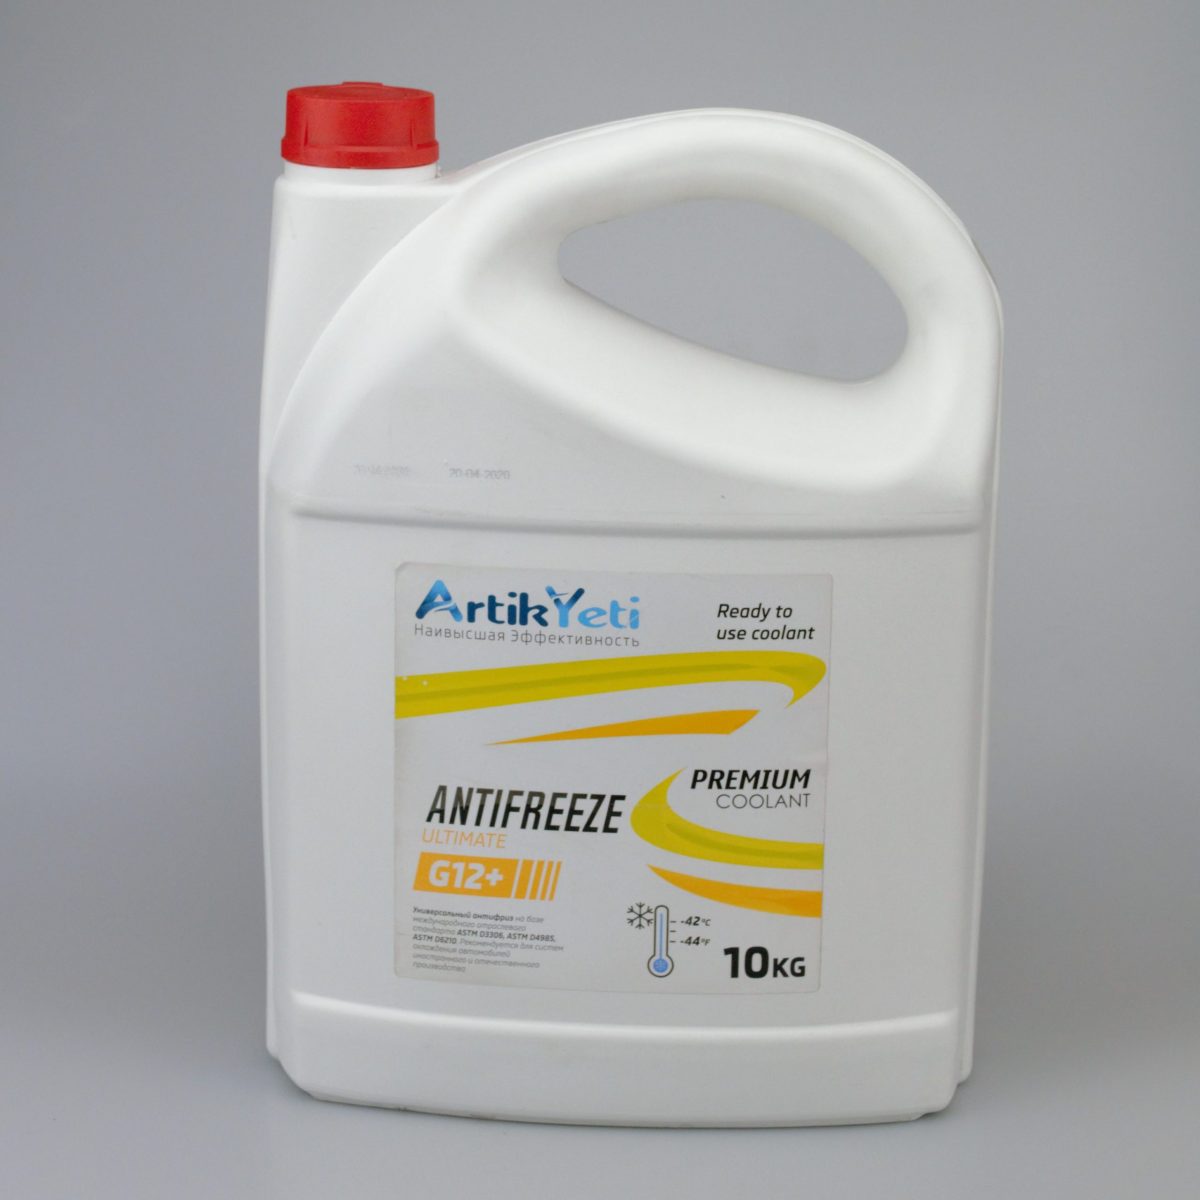 Узнать цену на антифриз -ArtikYeti Antifreeze Ultimate G12+ желтый 10кг